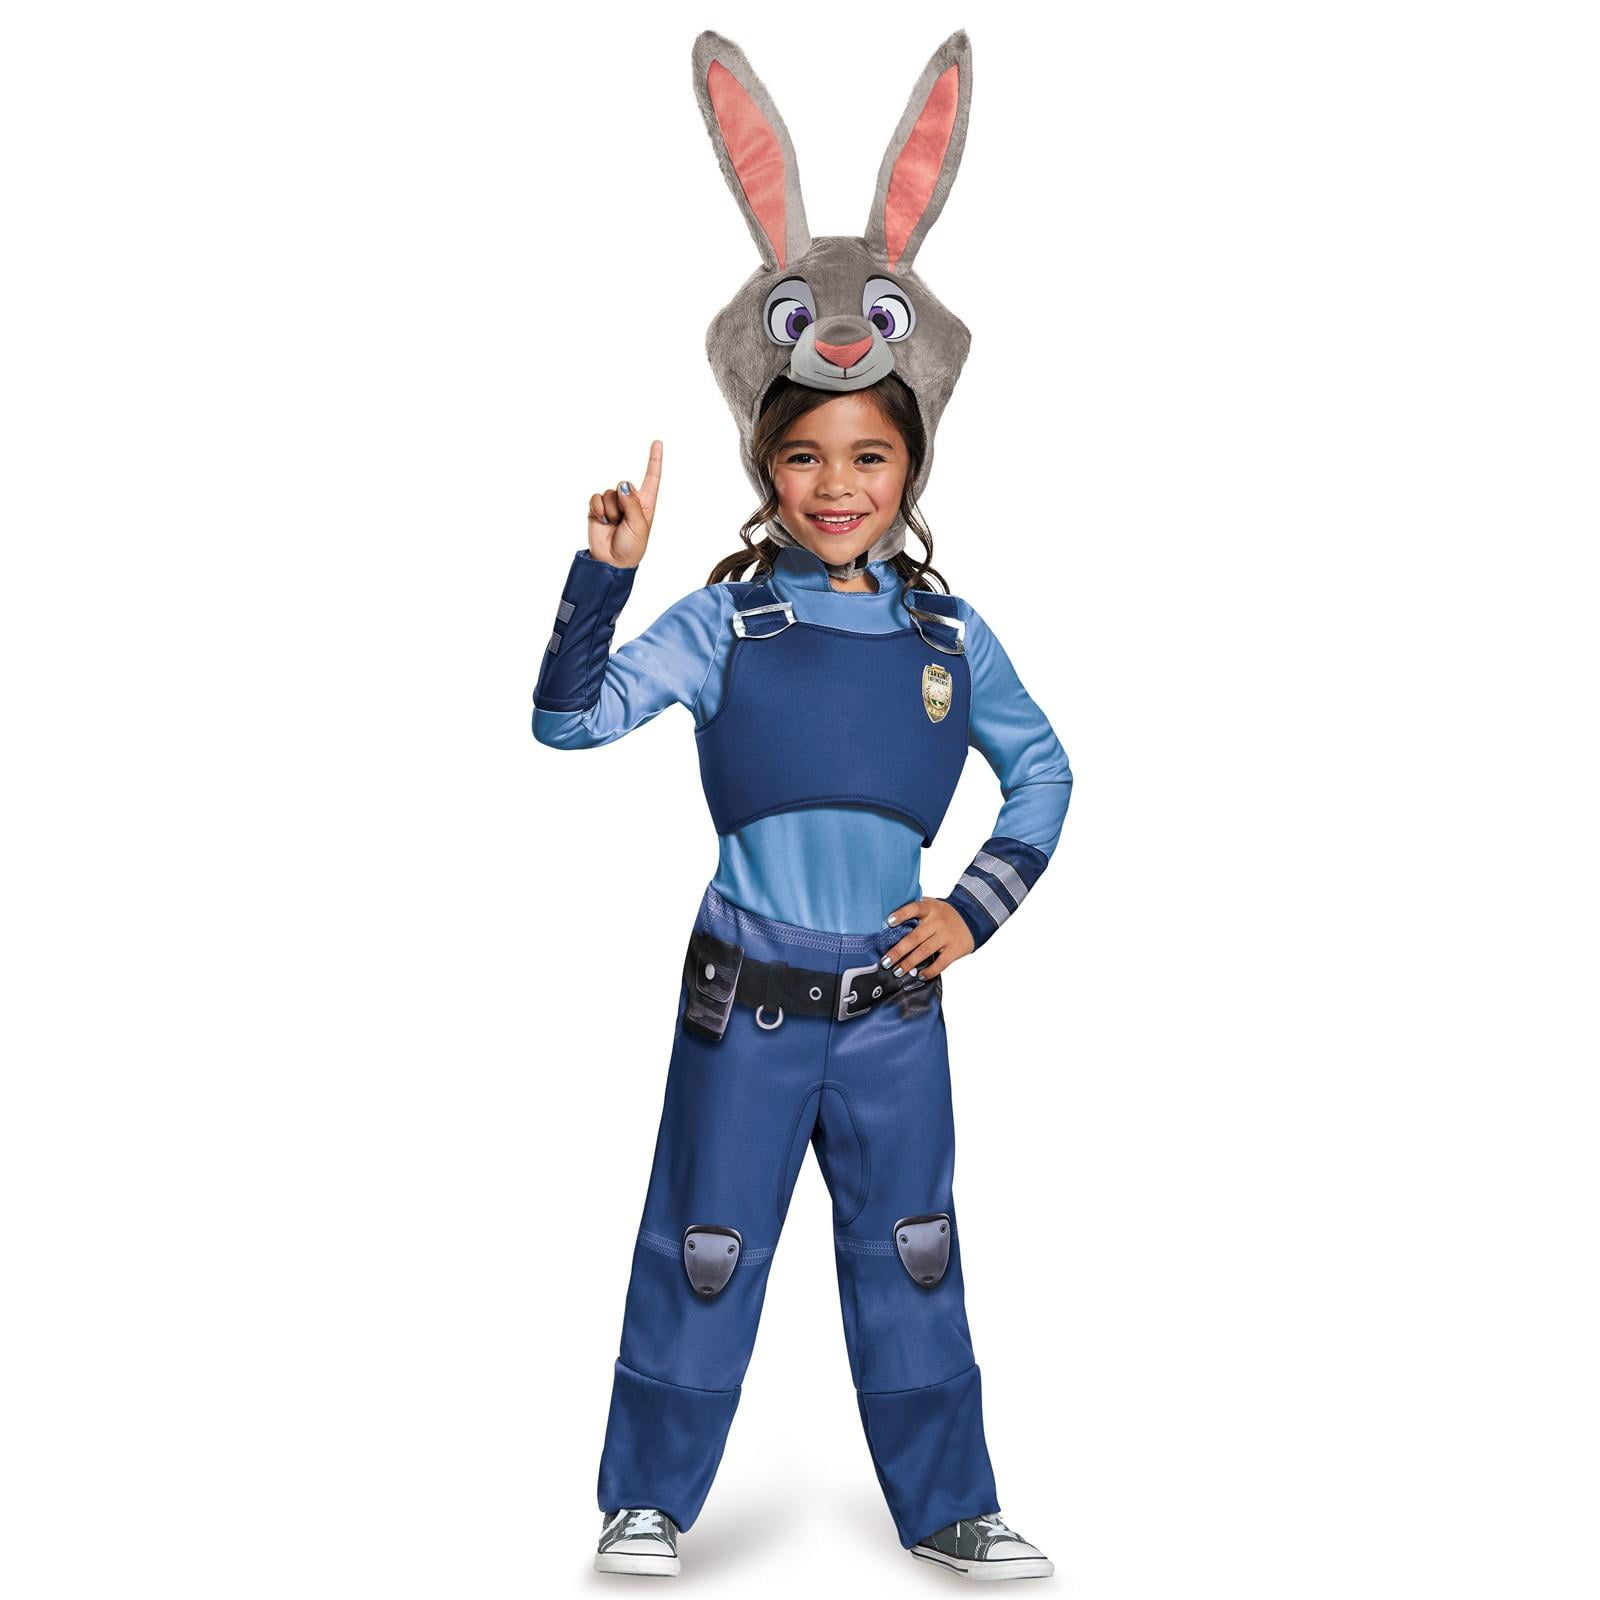 Zootopia Judy Hopps Cosplay Costume Cosplay costume All set